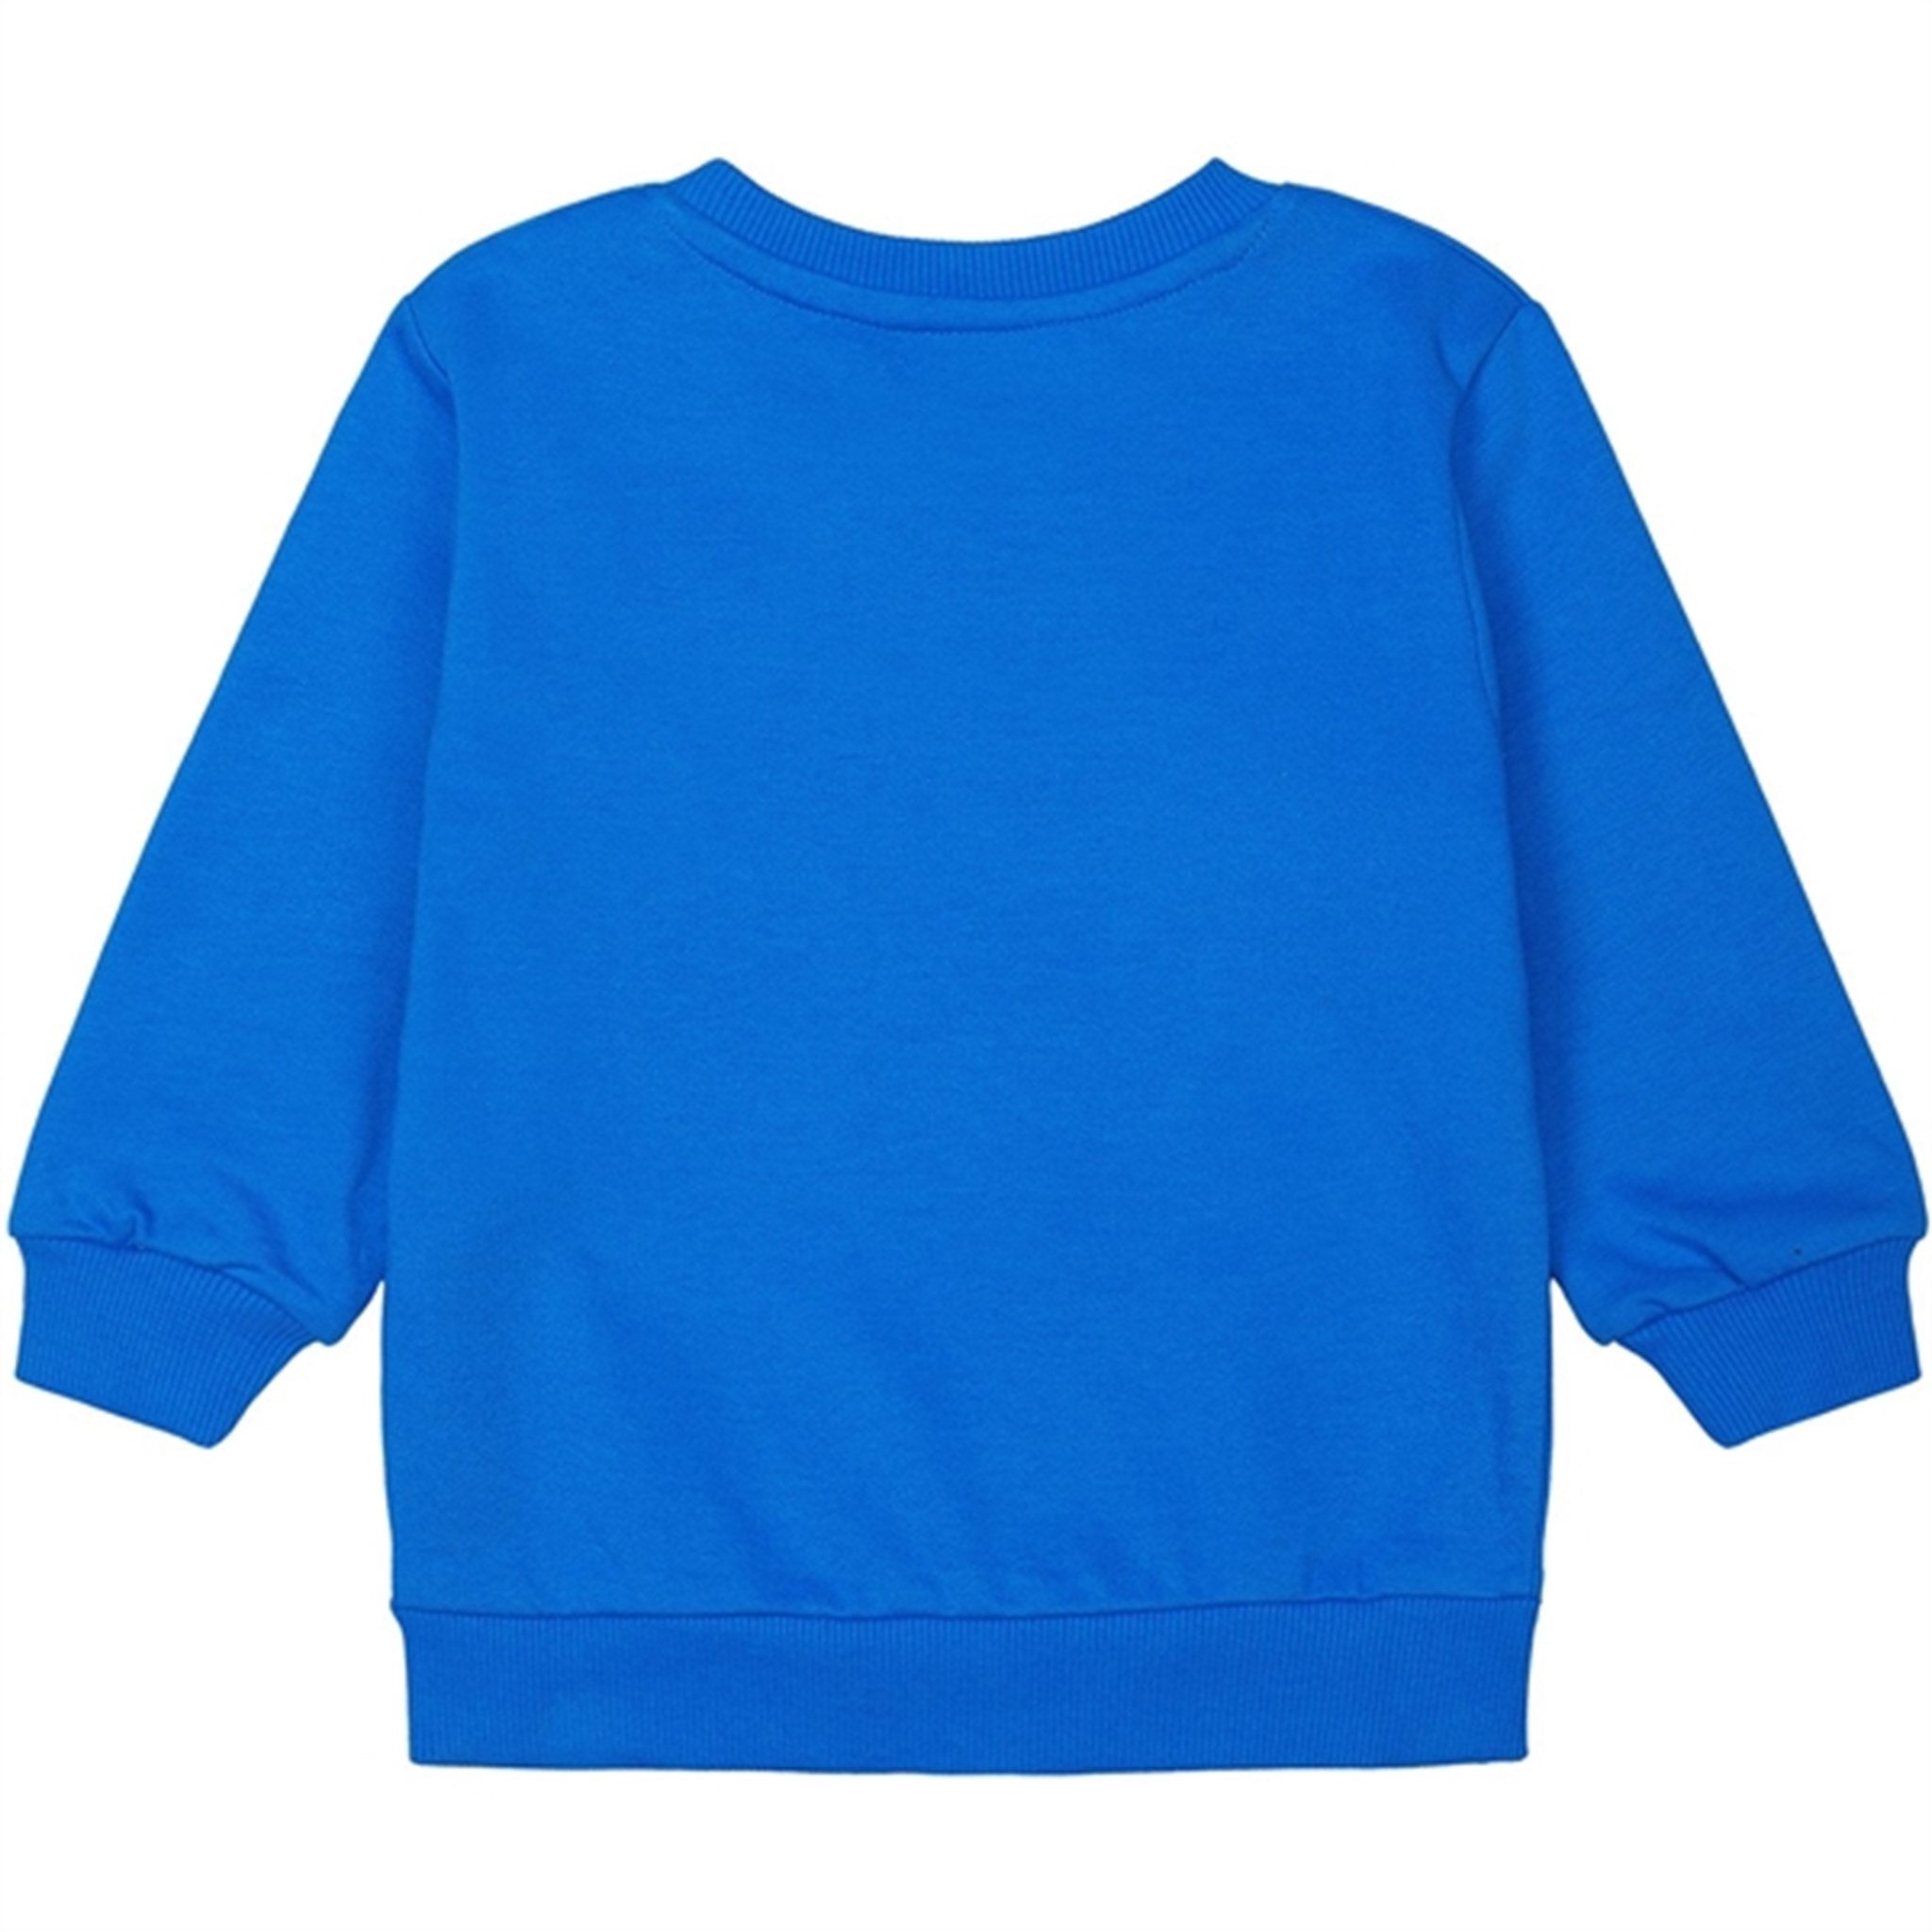 The NEW Siblings Strong Blue Jylan Sweatshirt 4